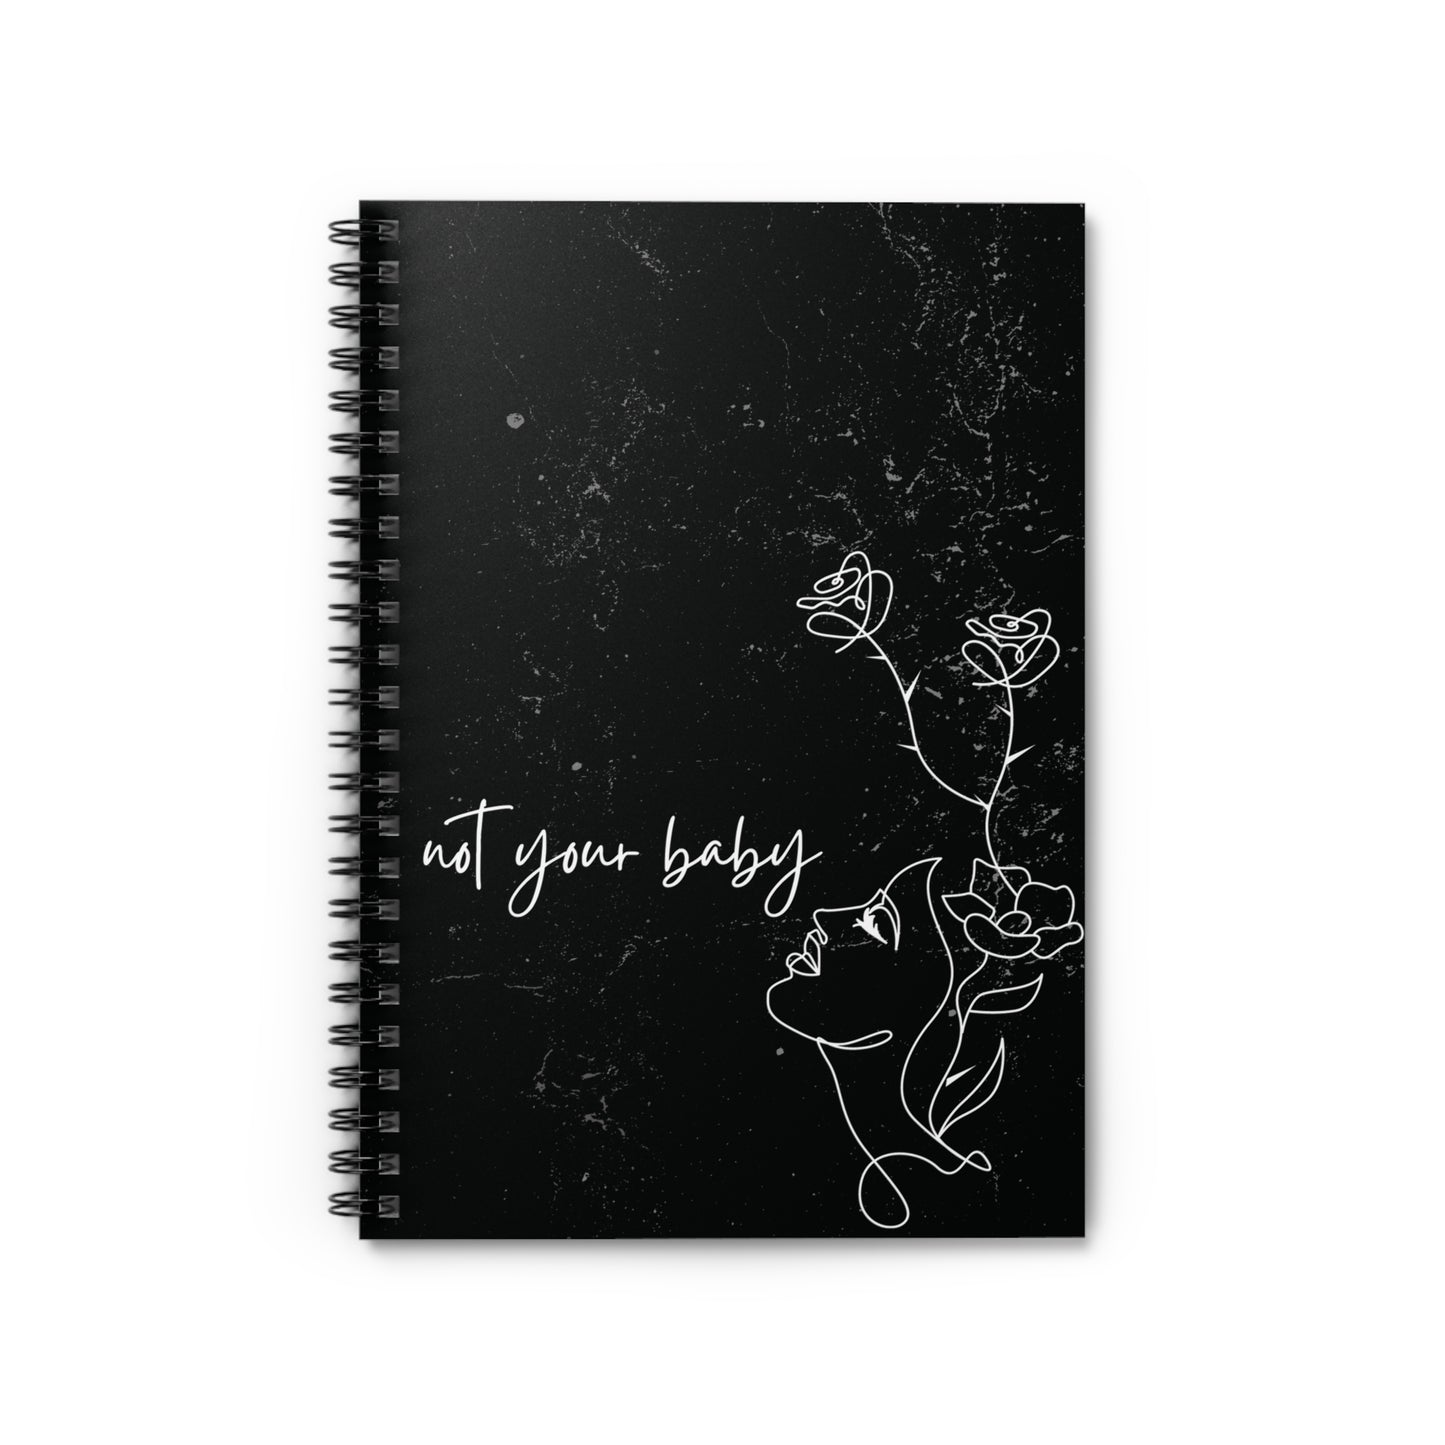 Dark Energy Notebook